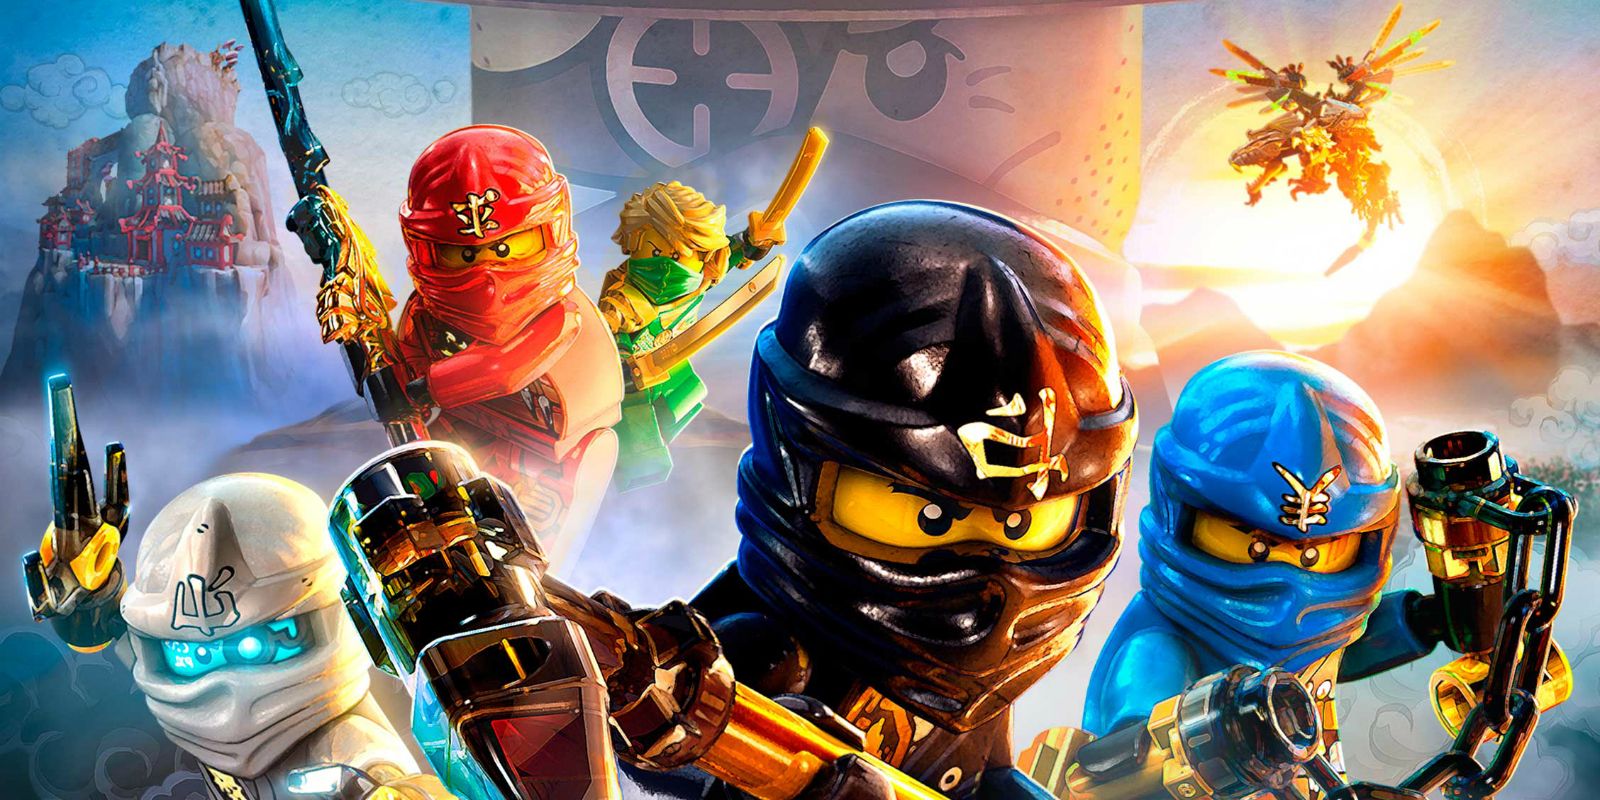 Find The Ninja Within Ya In The LEGO Ninjago Movie Poster